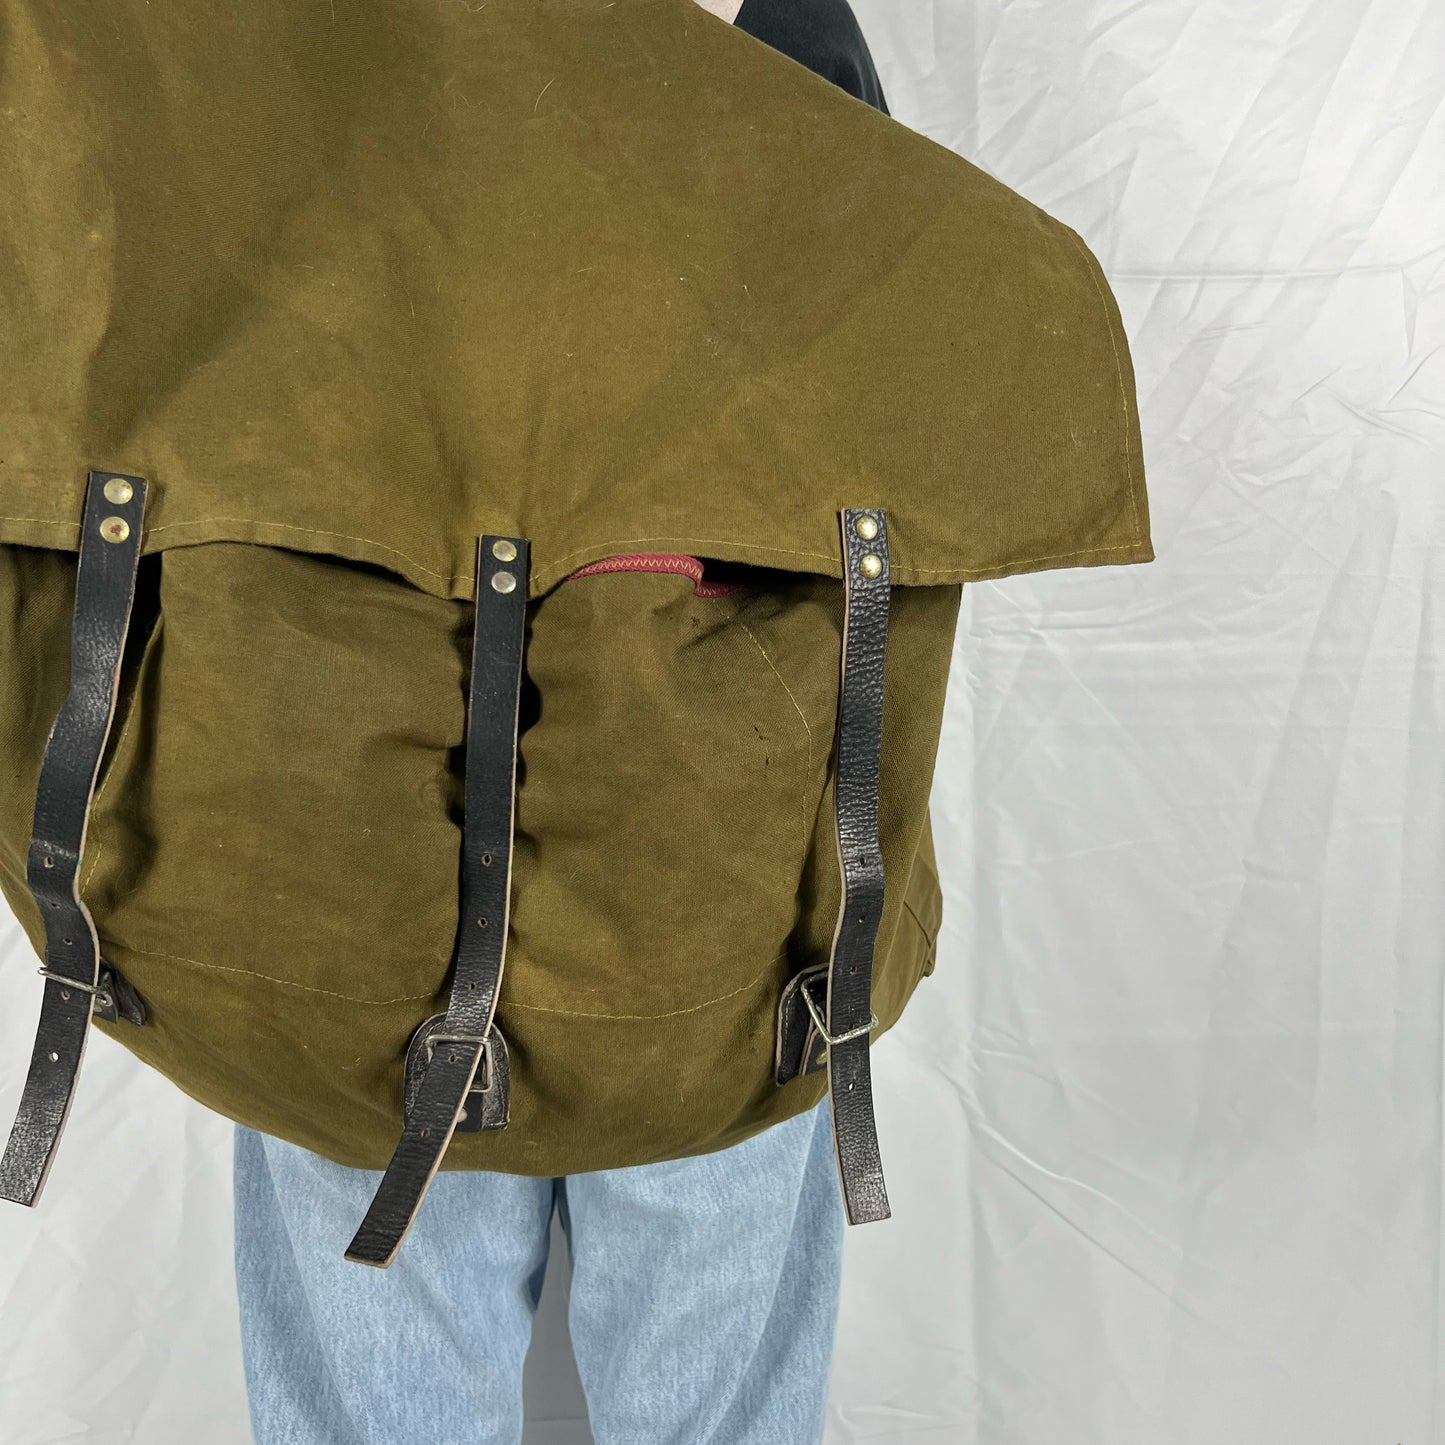 50s Army Rugsack Backpack